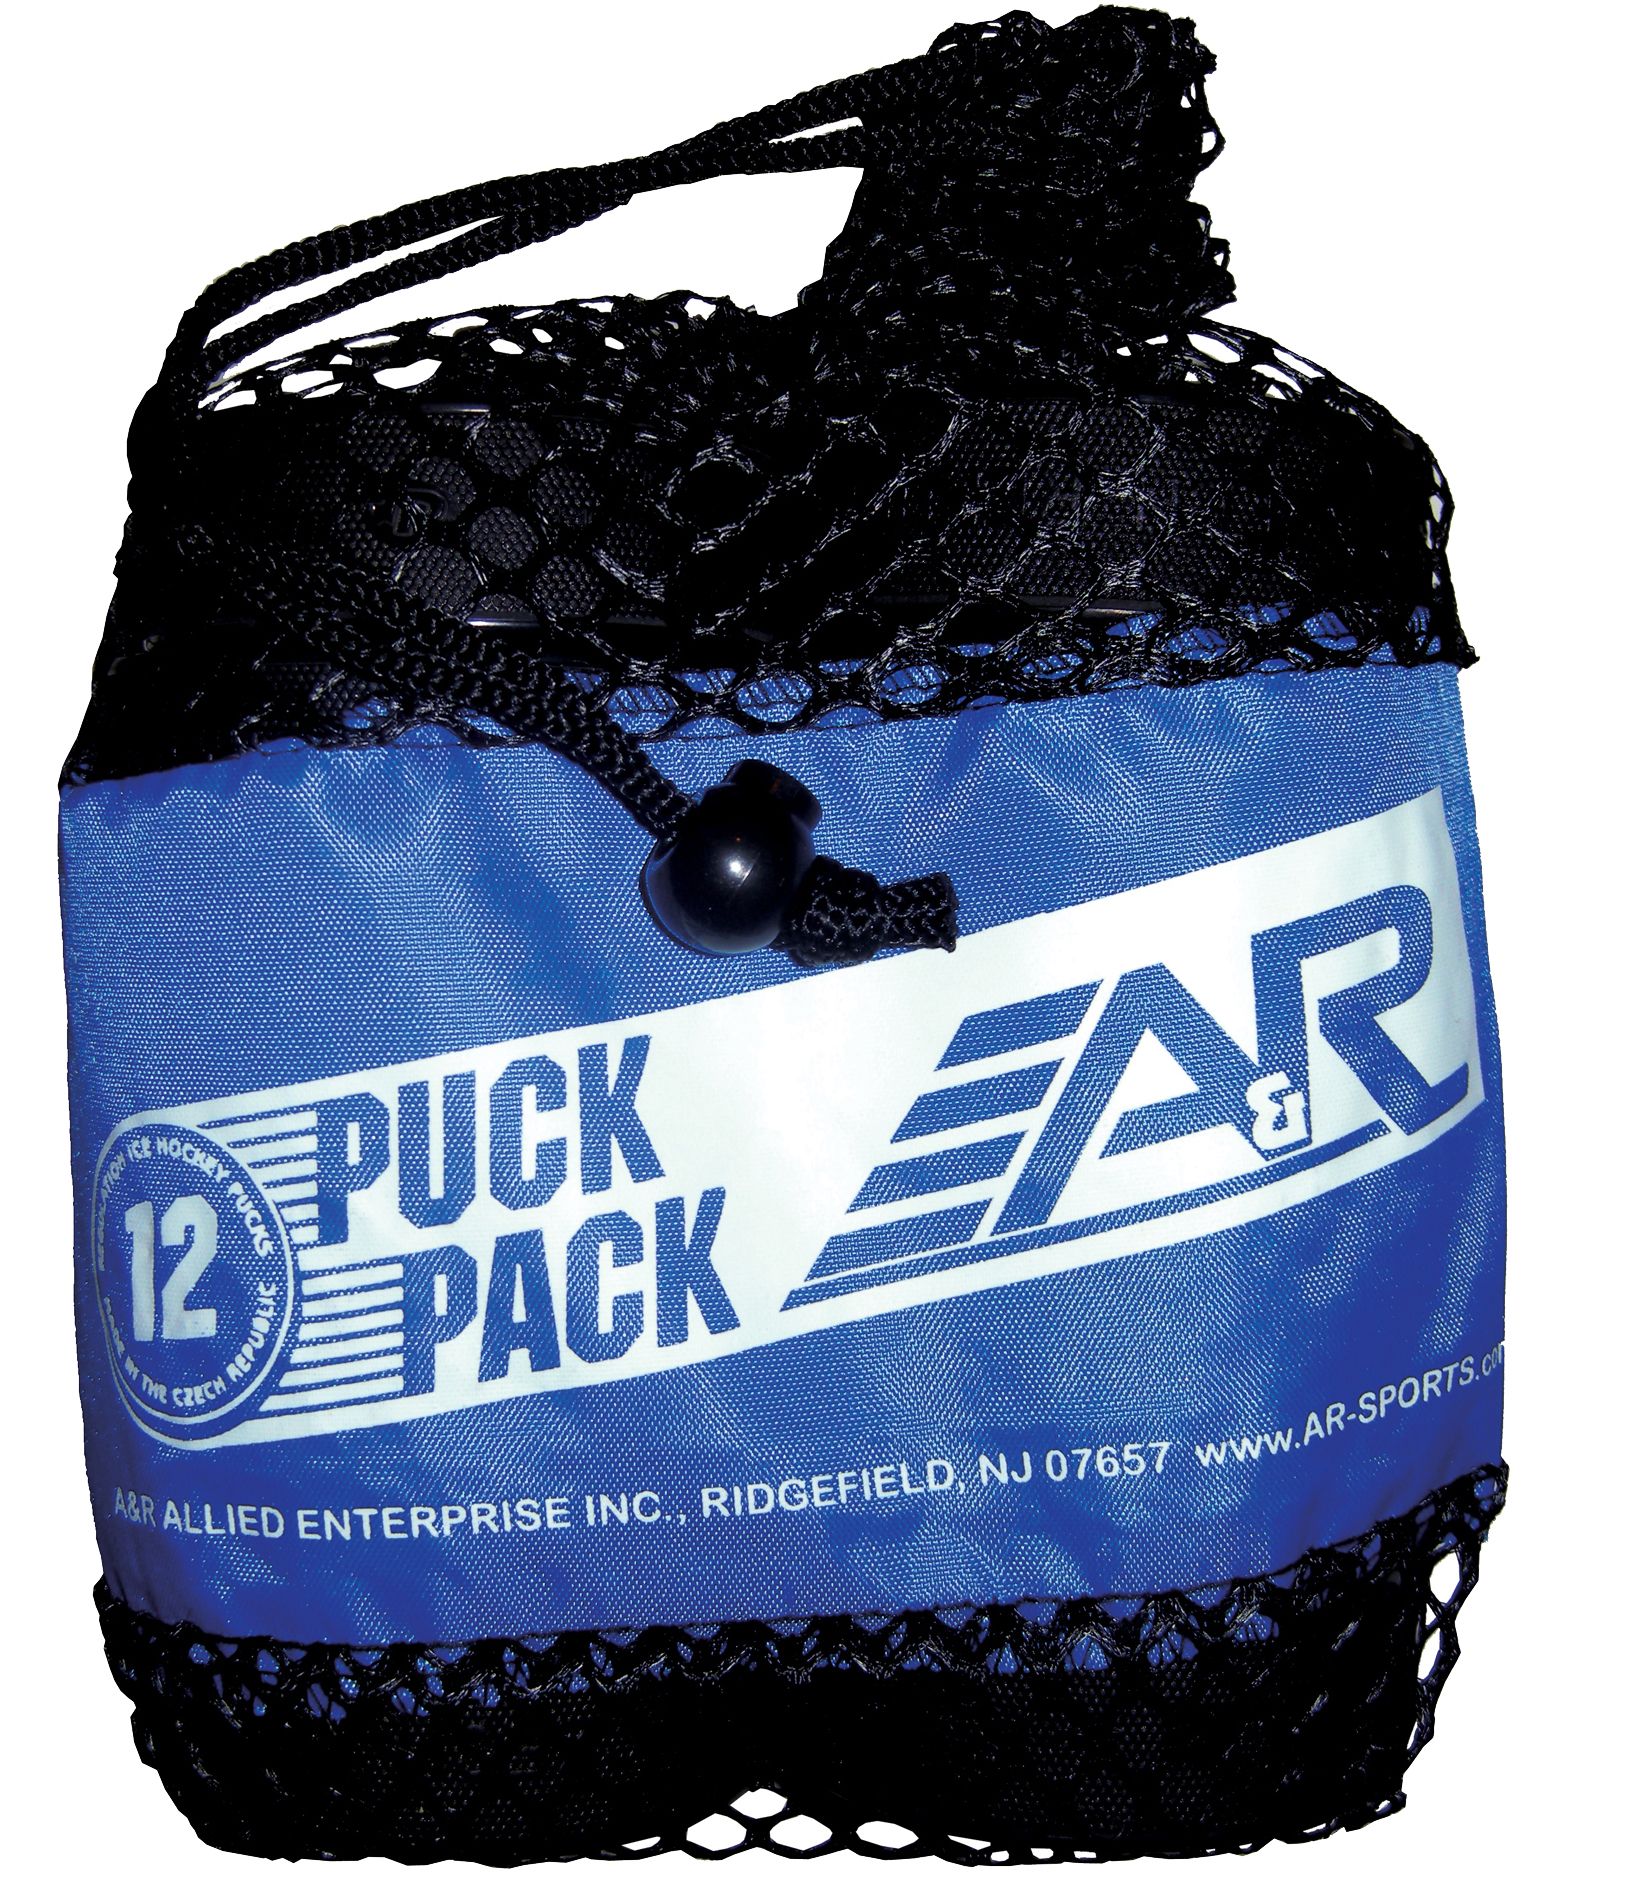 dicks ice packs